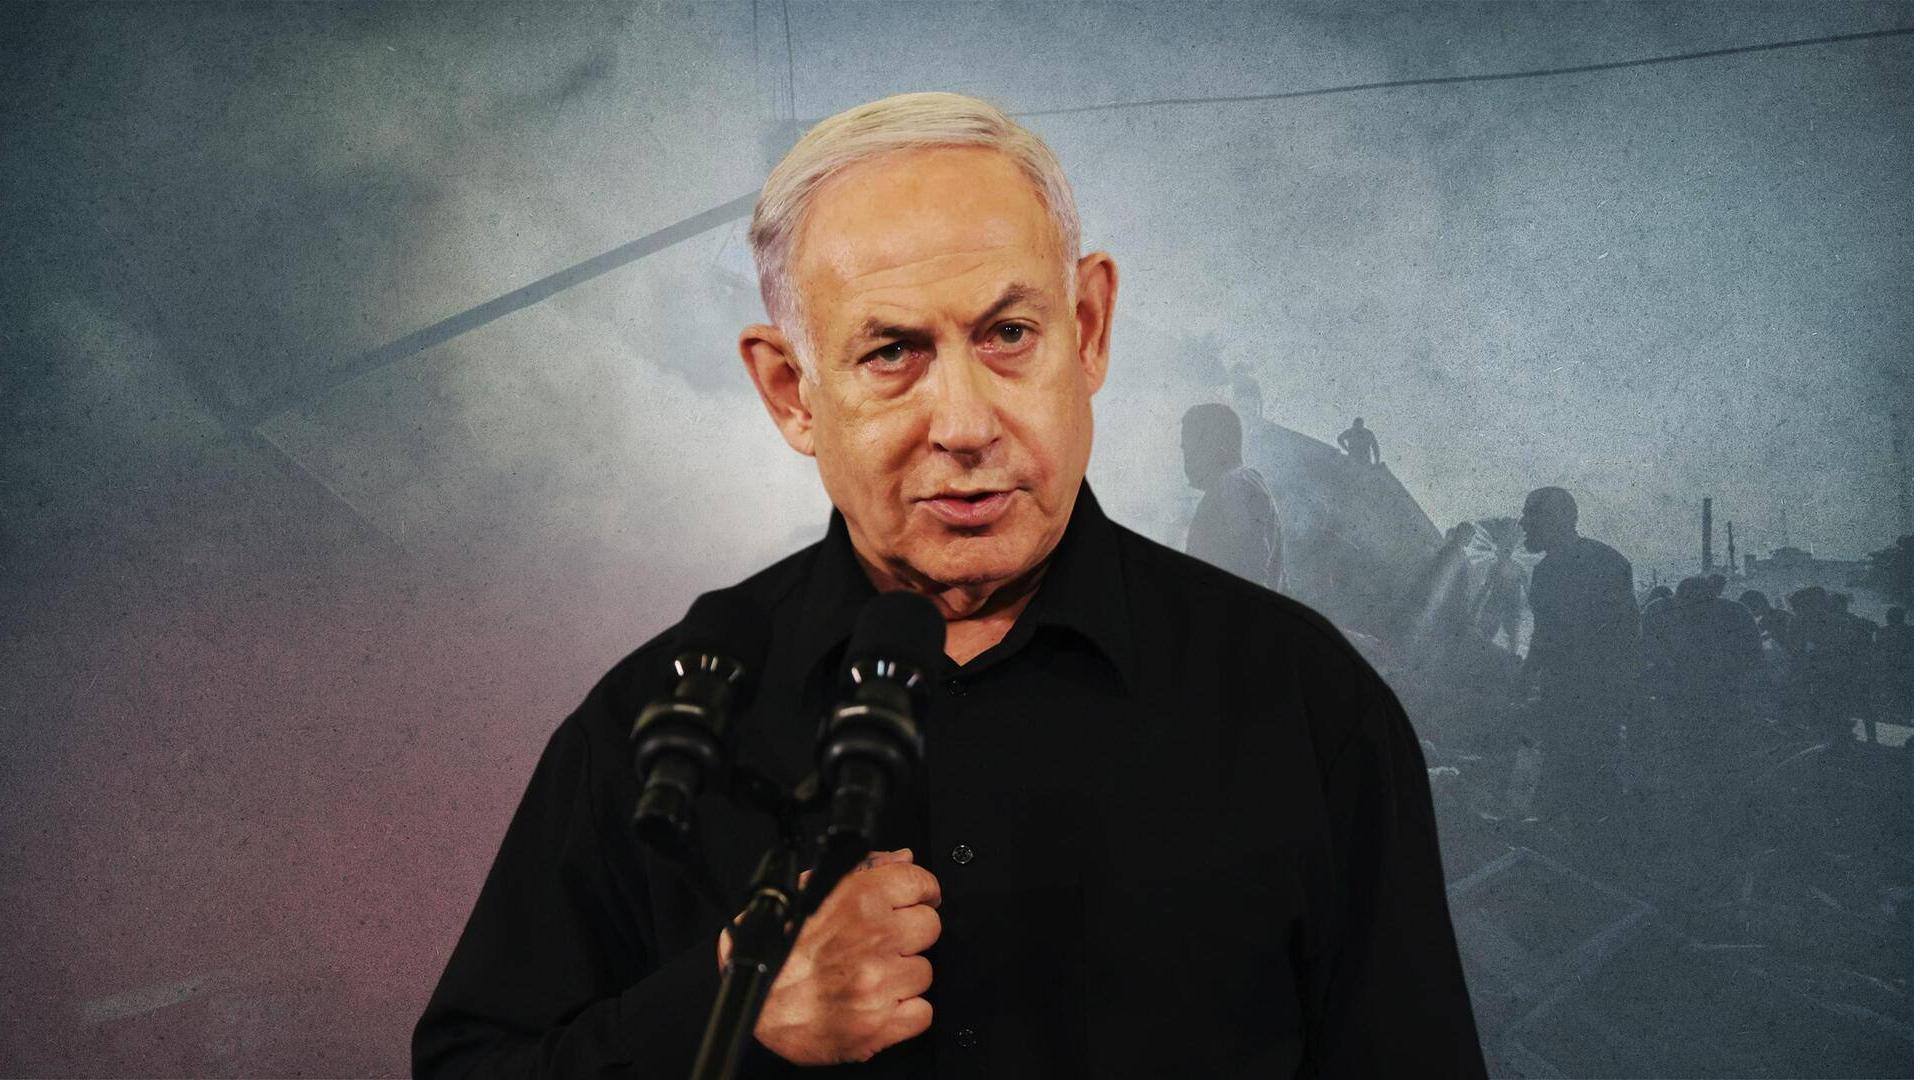 Israel mistakenly kills 3 hostages, Netanyahu says 'unbearable tragedy'